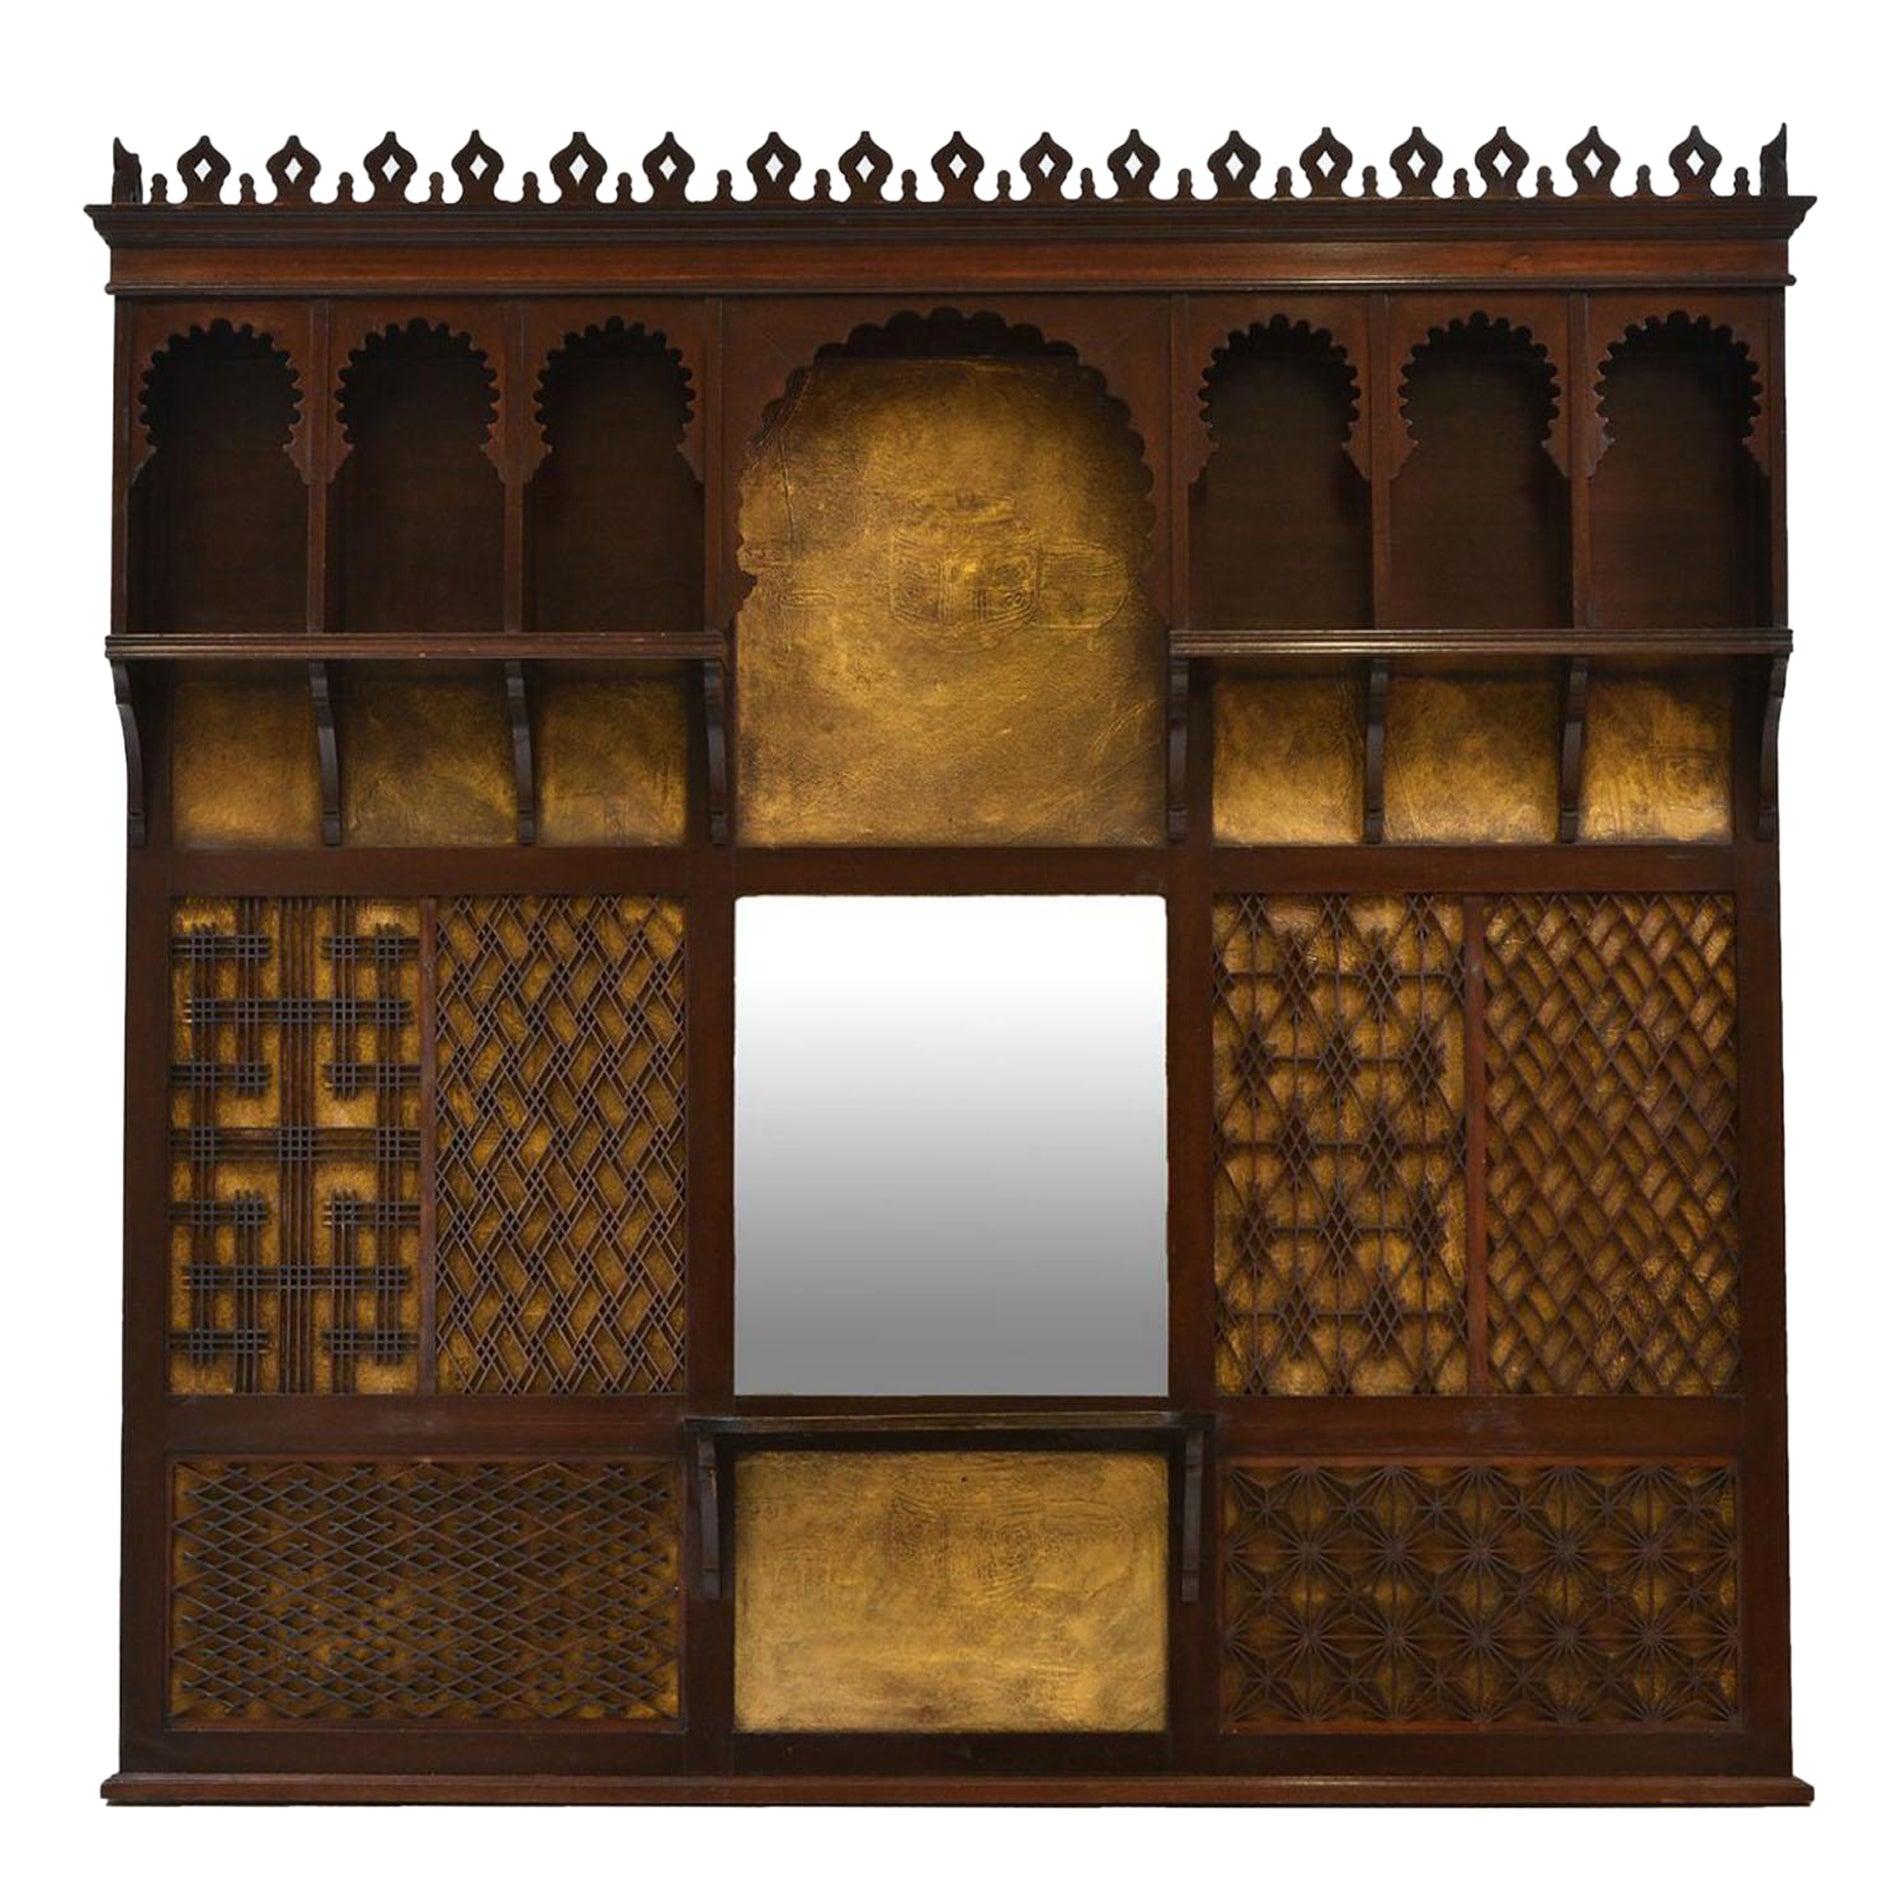 Antique Aesthetic Movement Large Decorative Wall Mantle Moorish Mirror